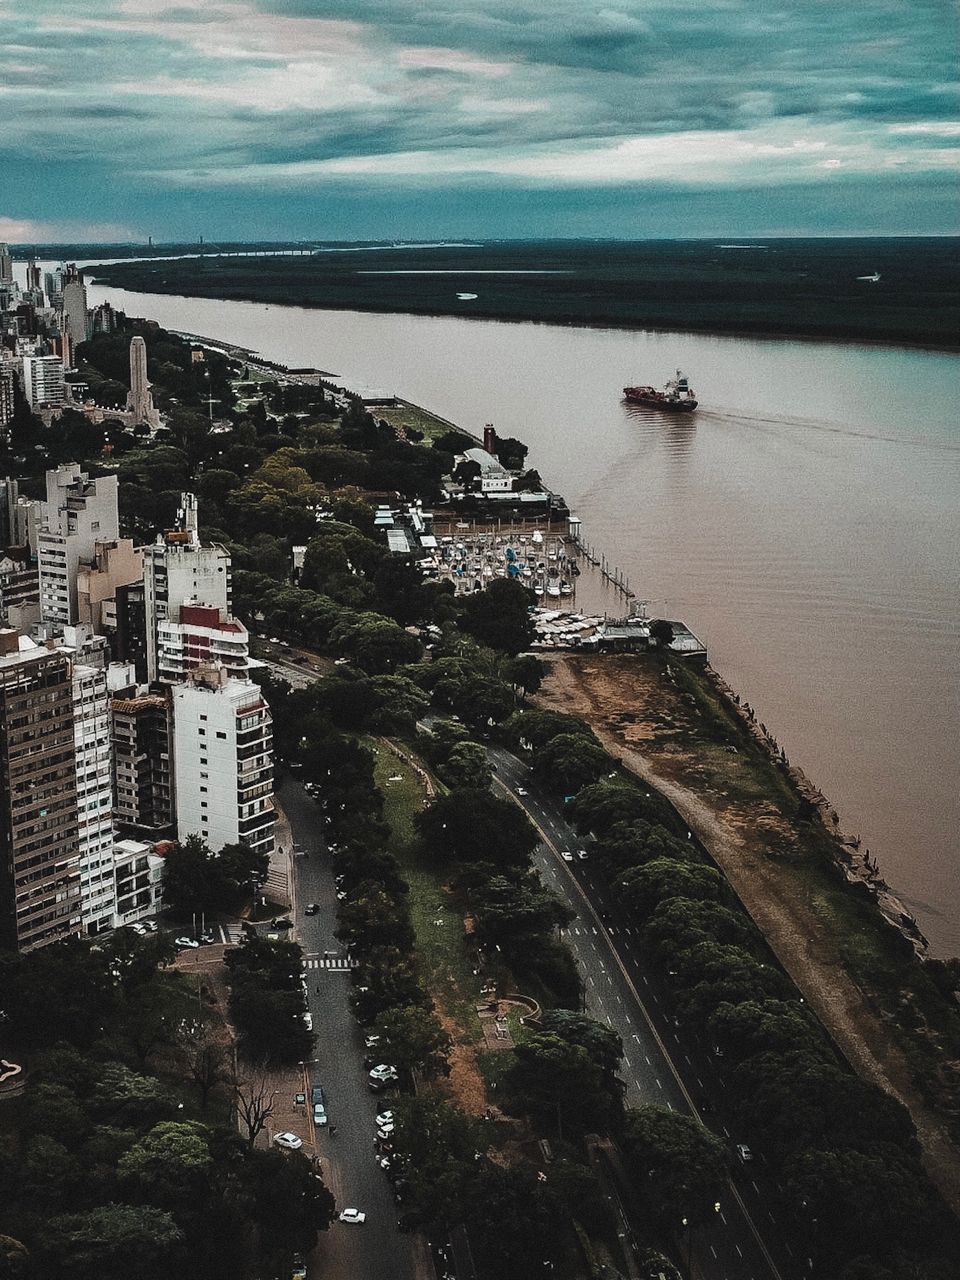 Río Paraná & Club Nautico - From Parque Urquiza - Drone, Argentina